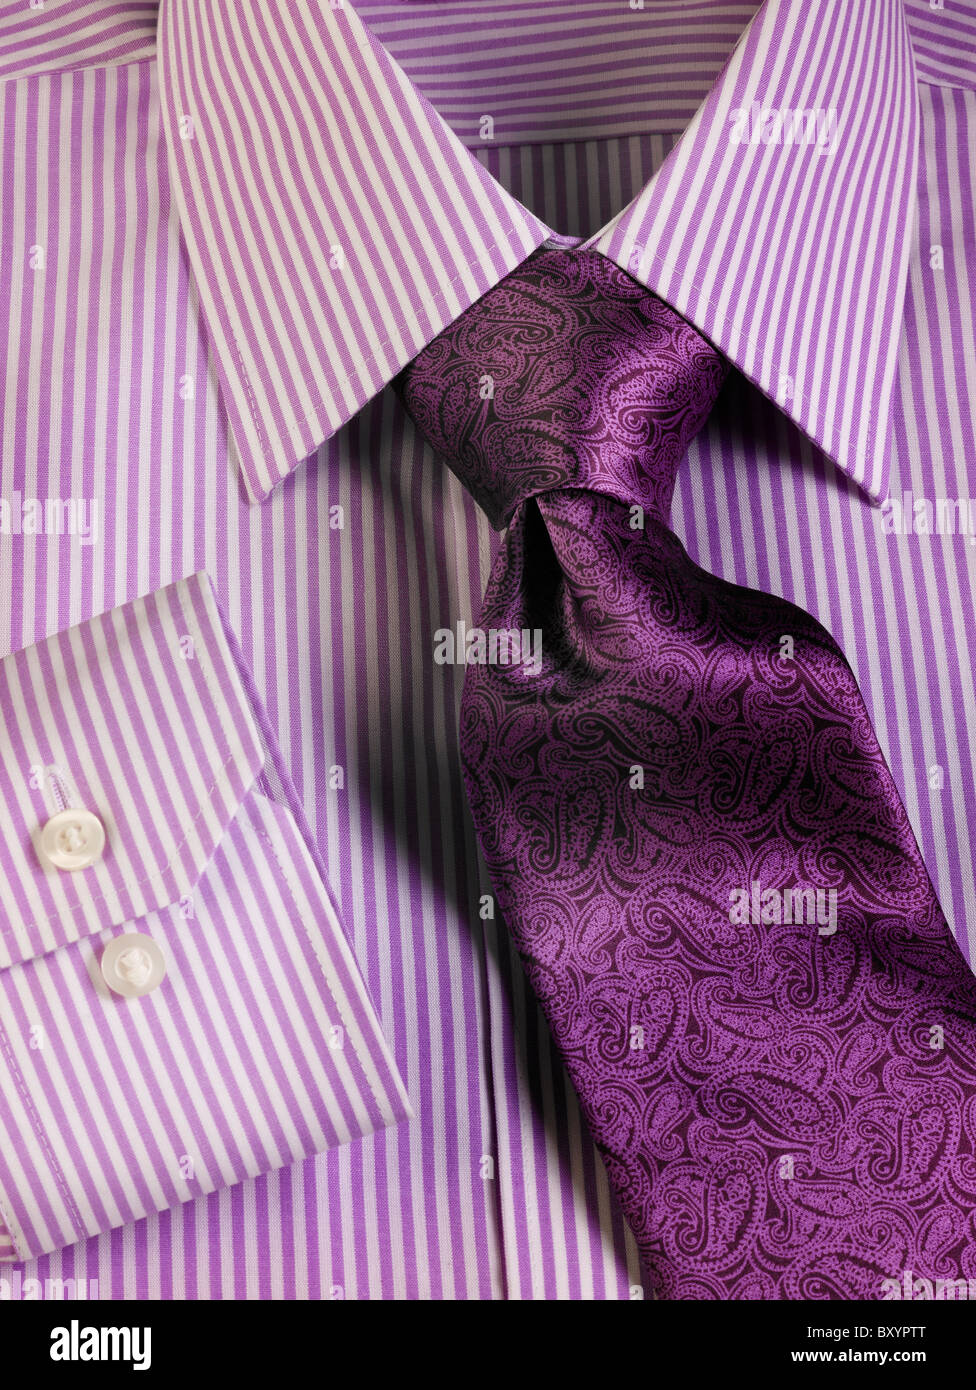 Mens lila gestreiftes Hemd und Krawatte Stockfotografie - Alamy